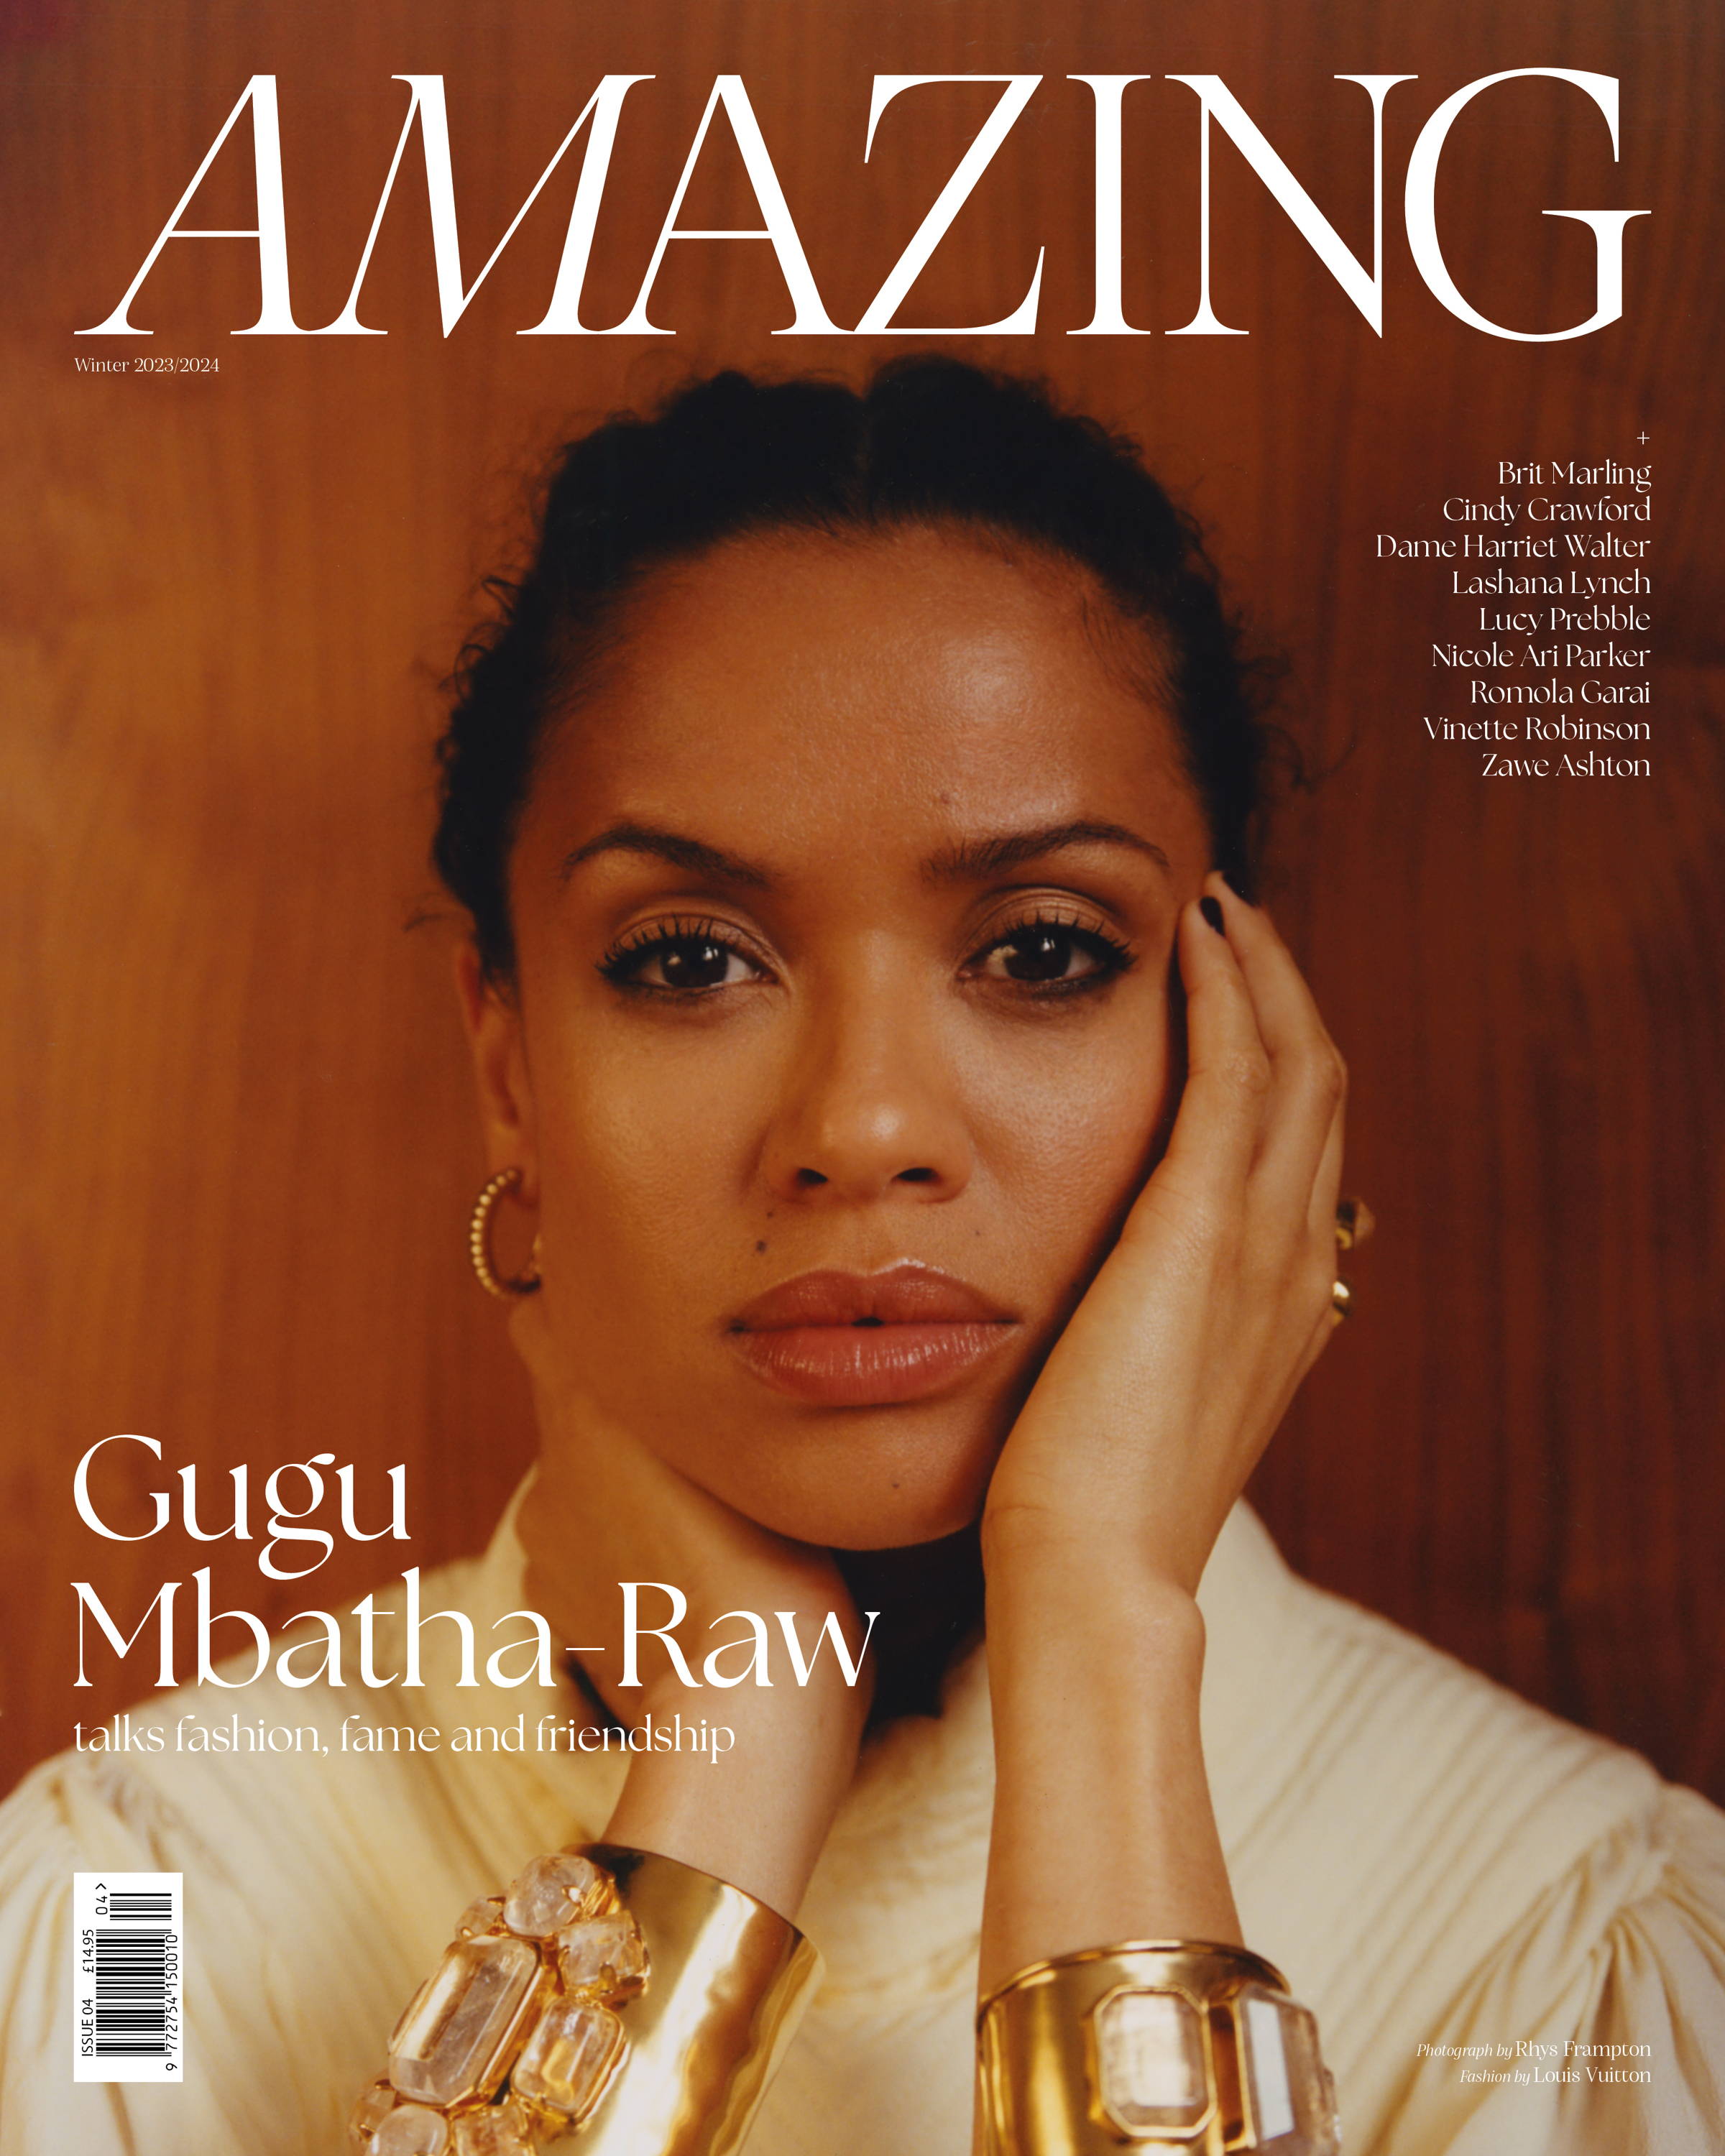 Gugu Mbatha-Raw covers AMAZING magazine issue 4 by Rhys Frampton